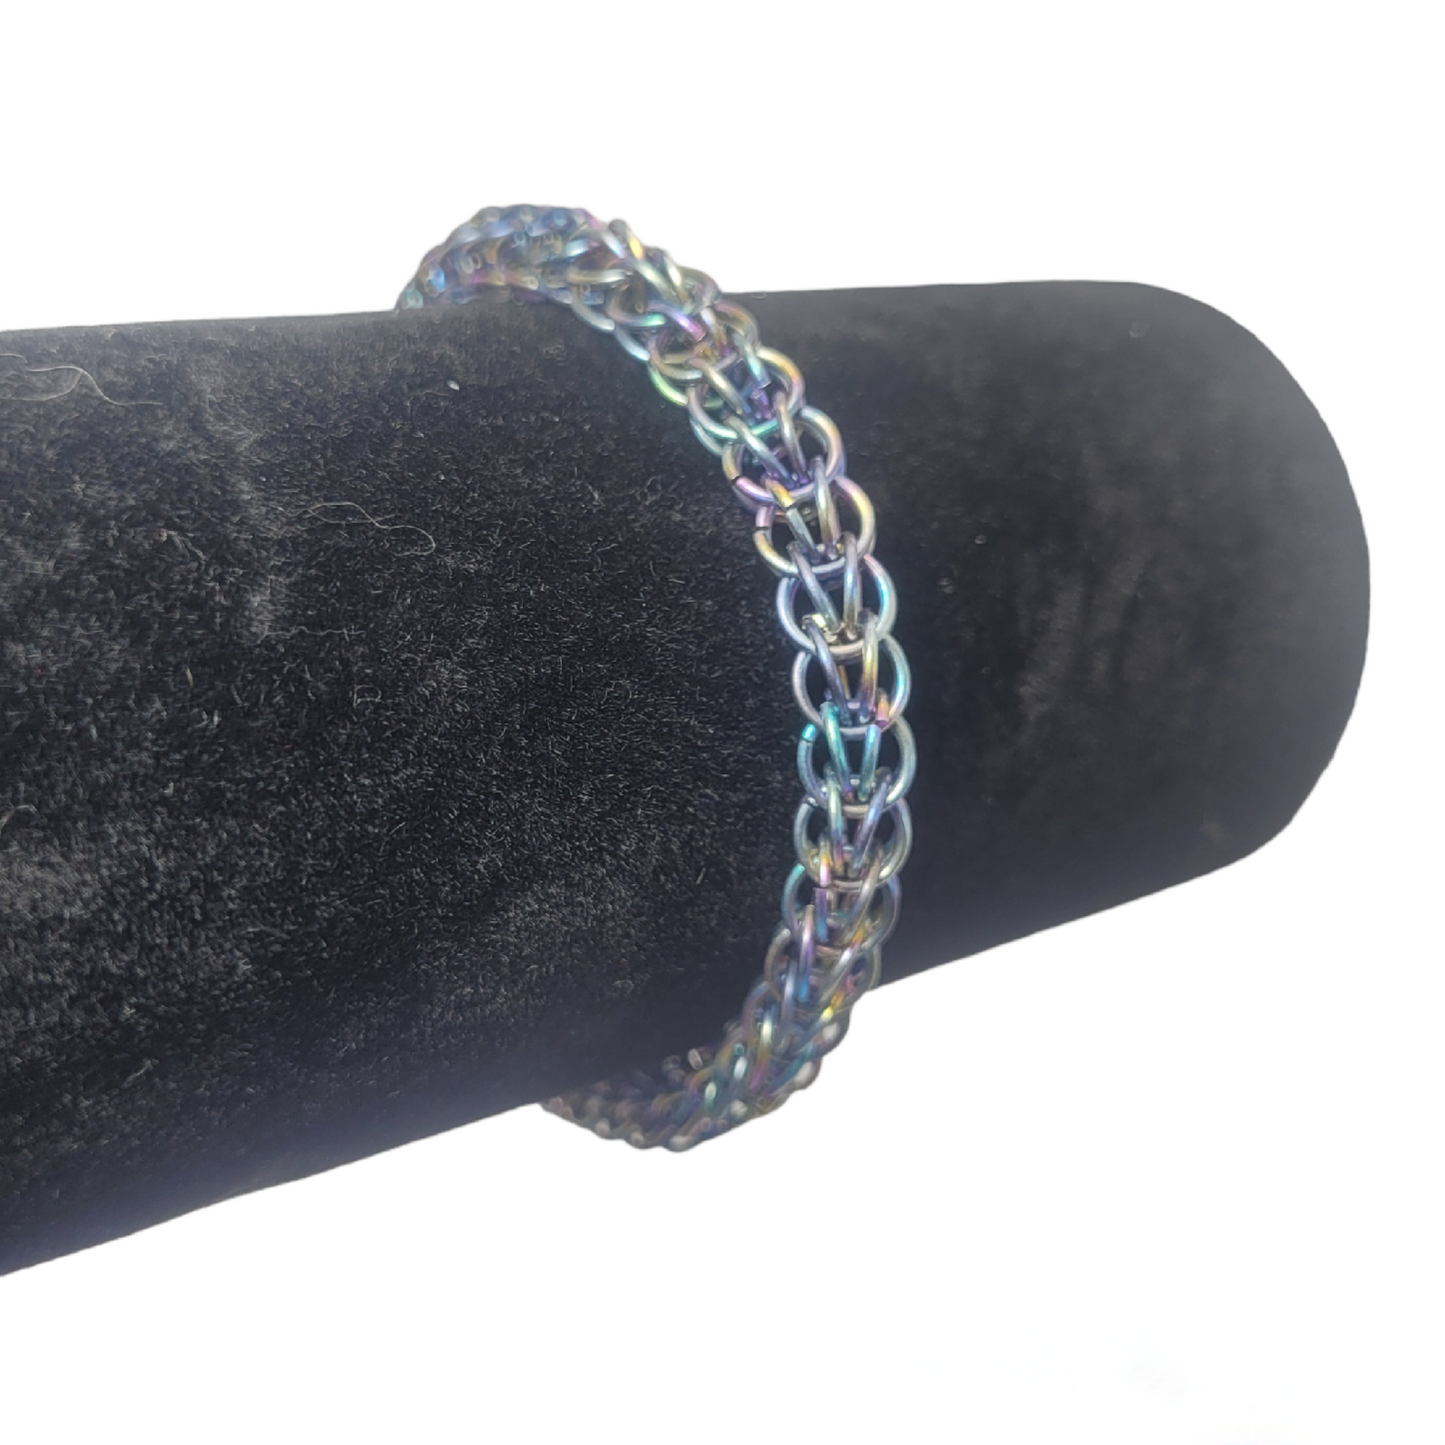 Rainbow chainmail bracelet